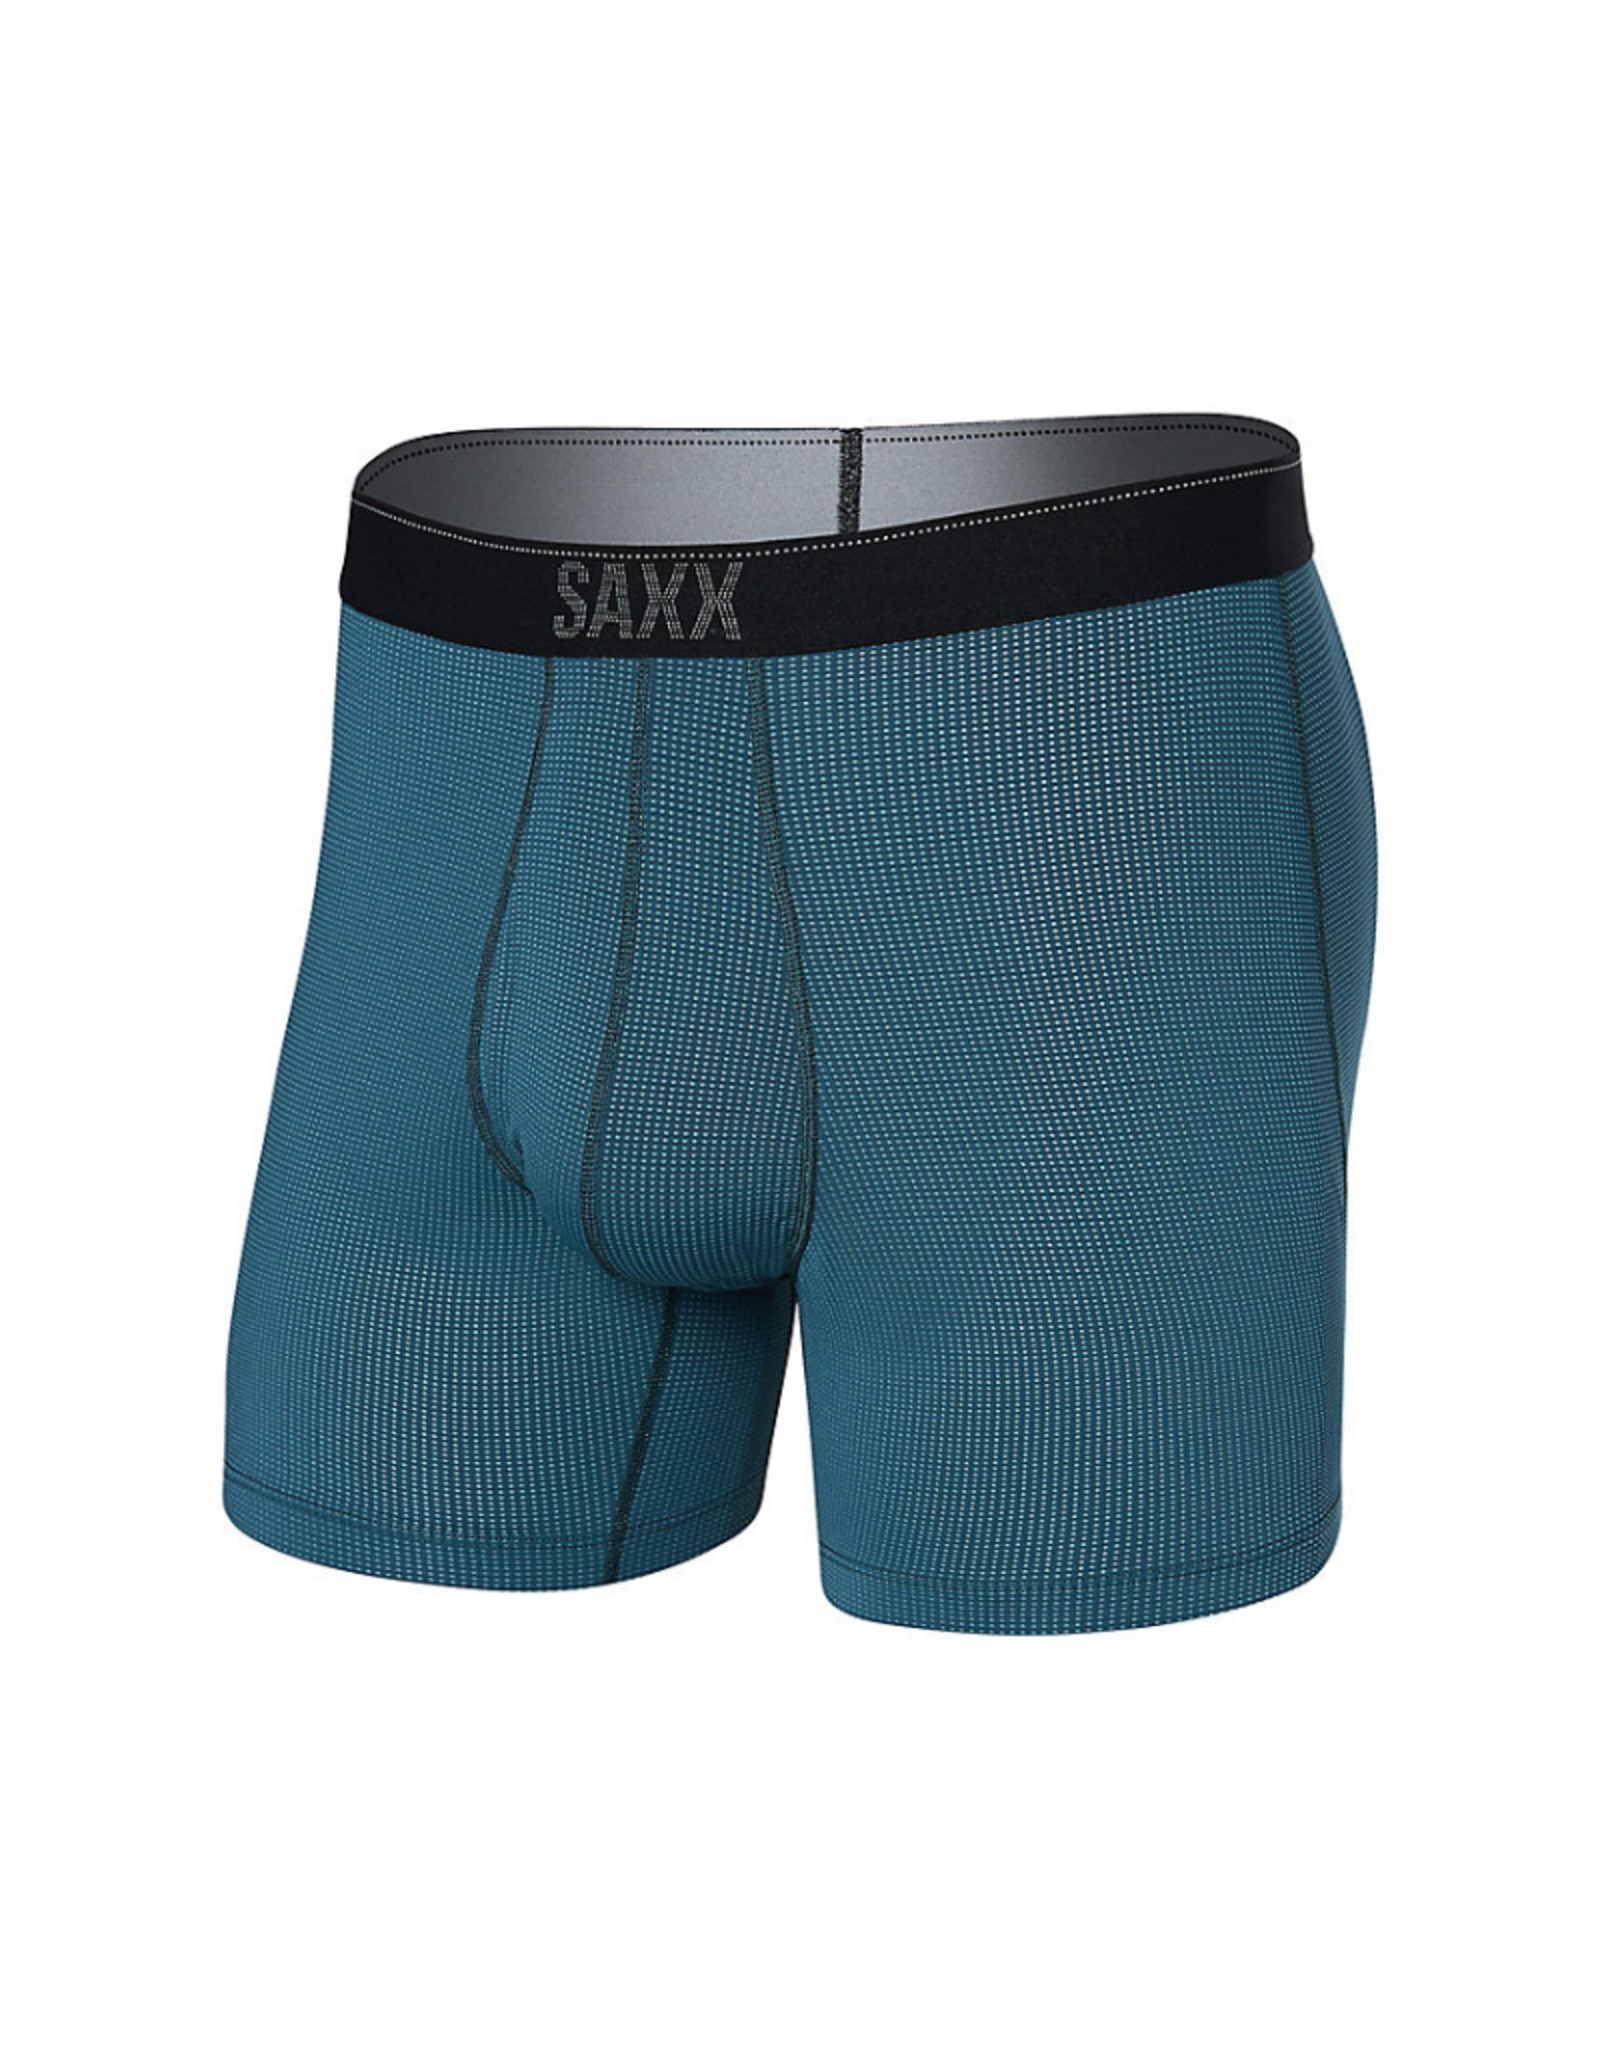 SAXX Quest Quick Dry Mesh Boxer Brief